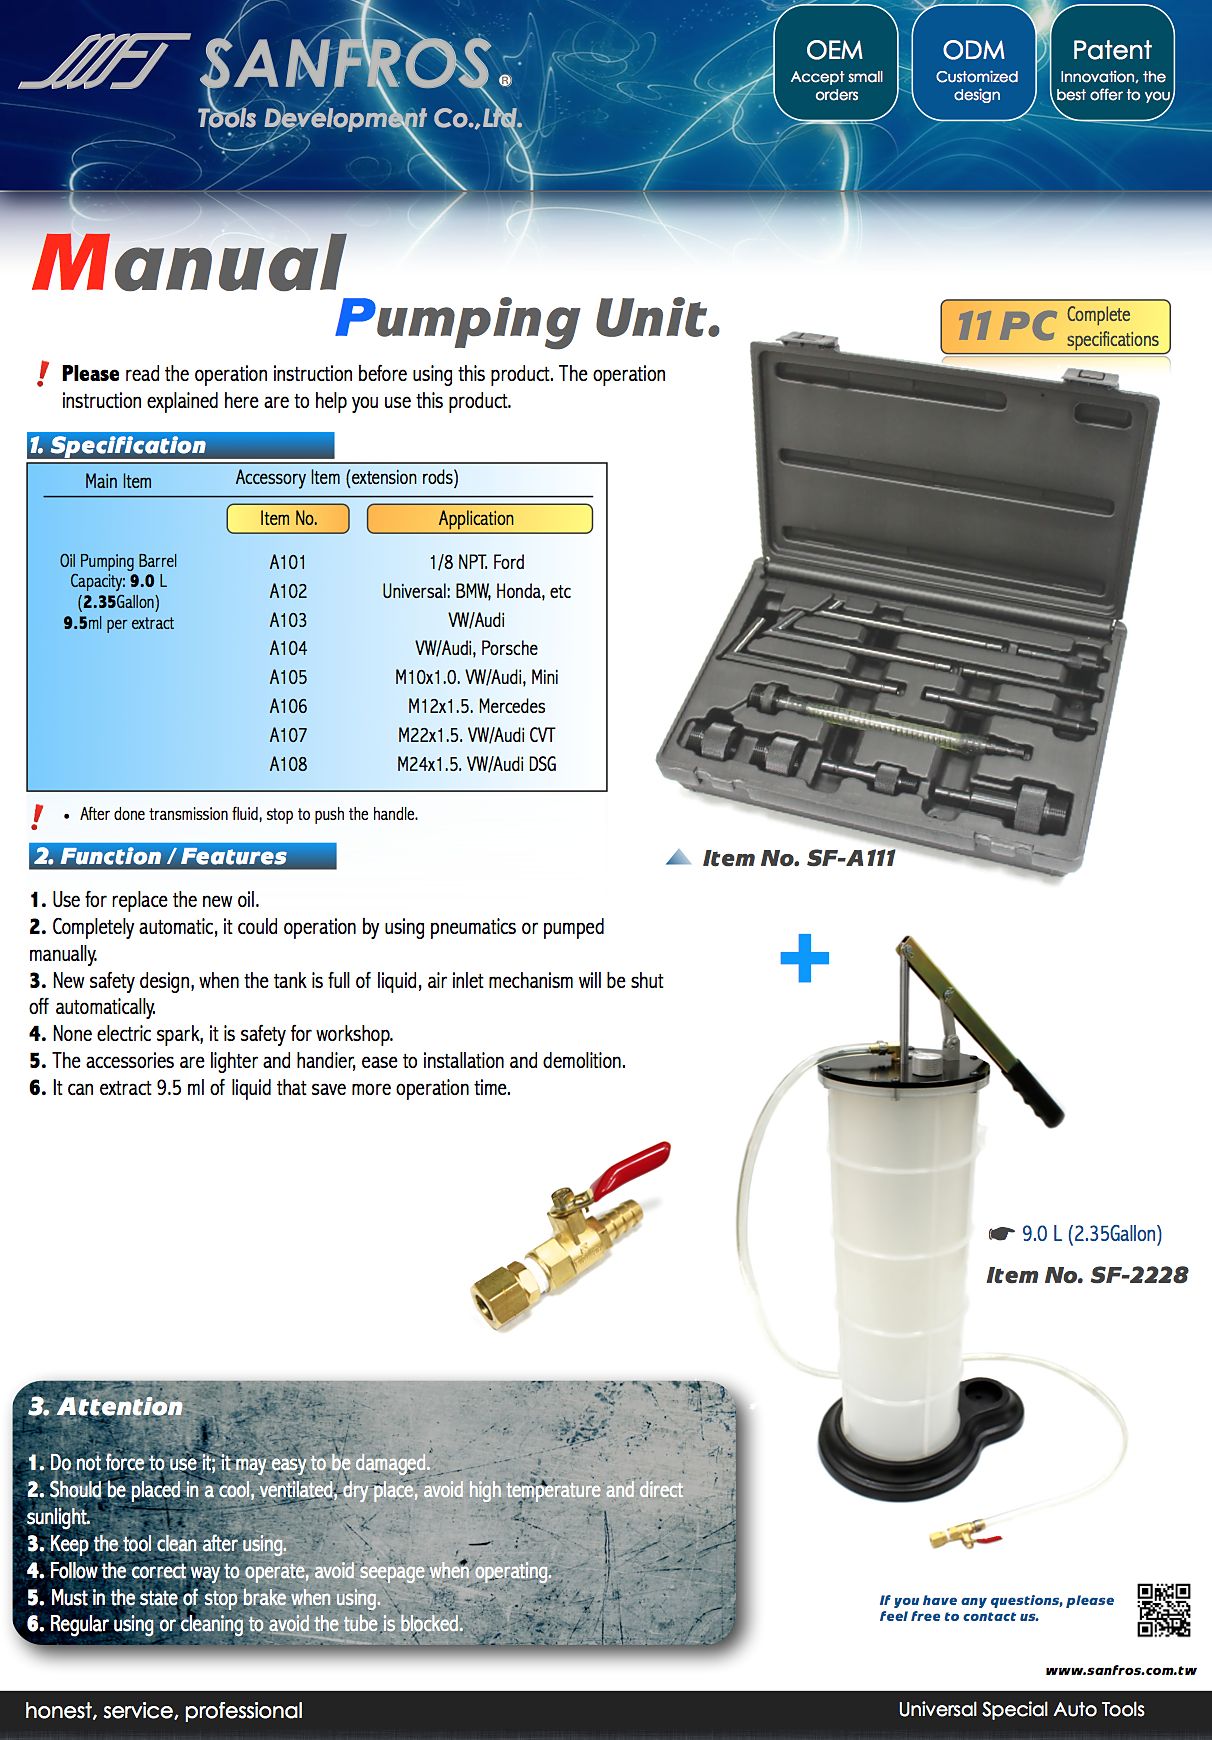 Manual Pumping Unit 9 liters